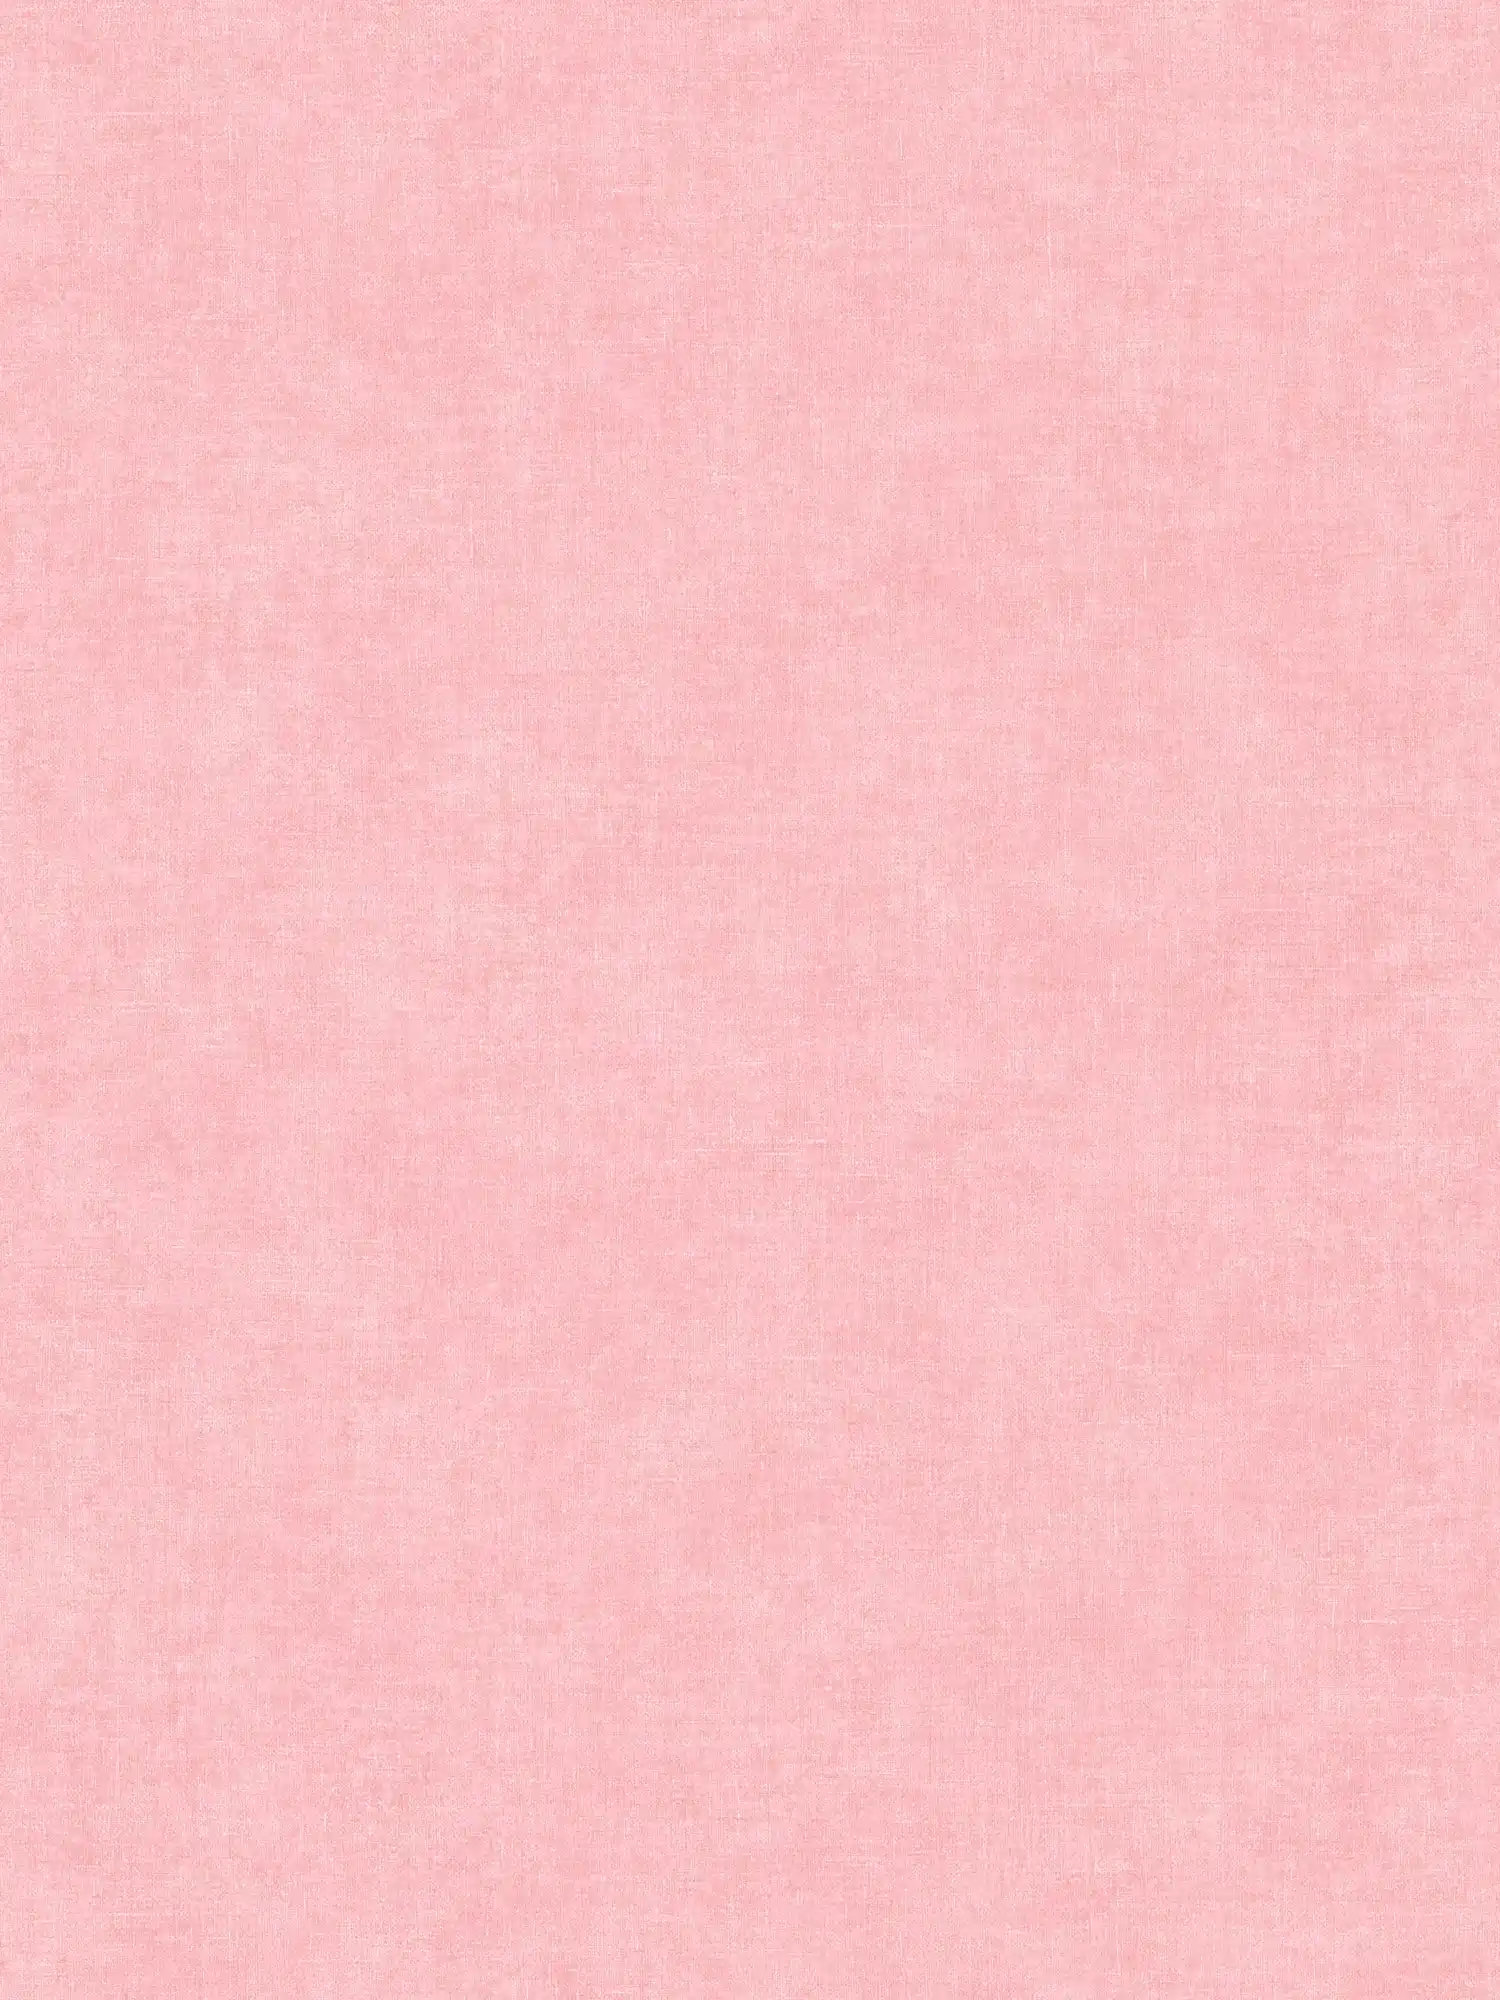 Pink wallpaper plain & matte with texture pattern
